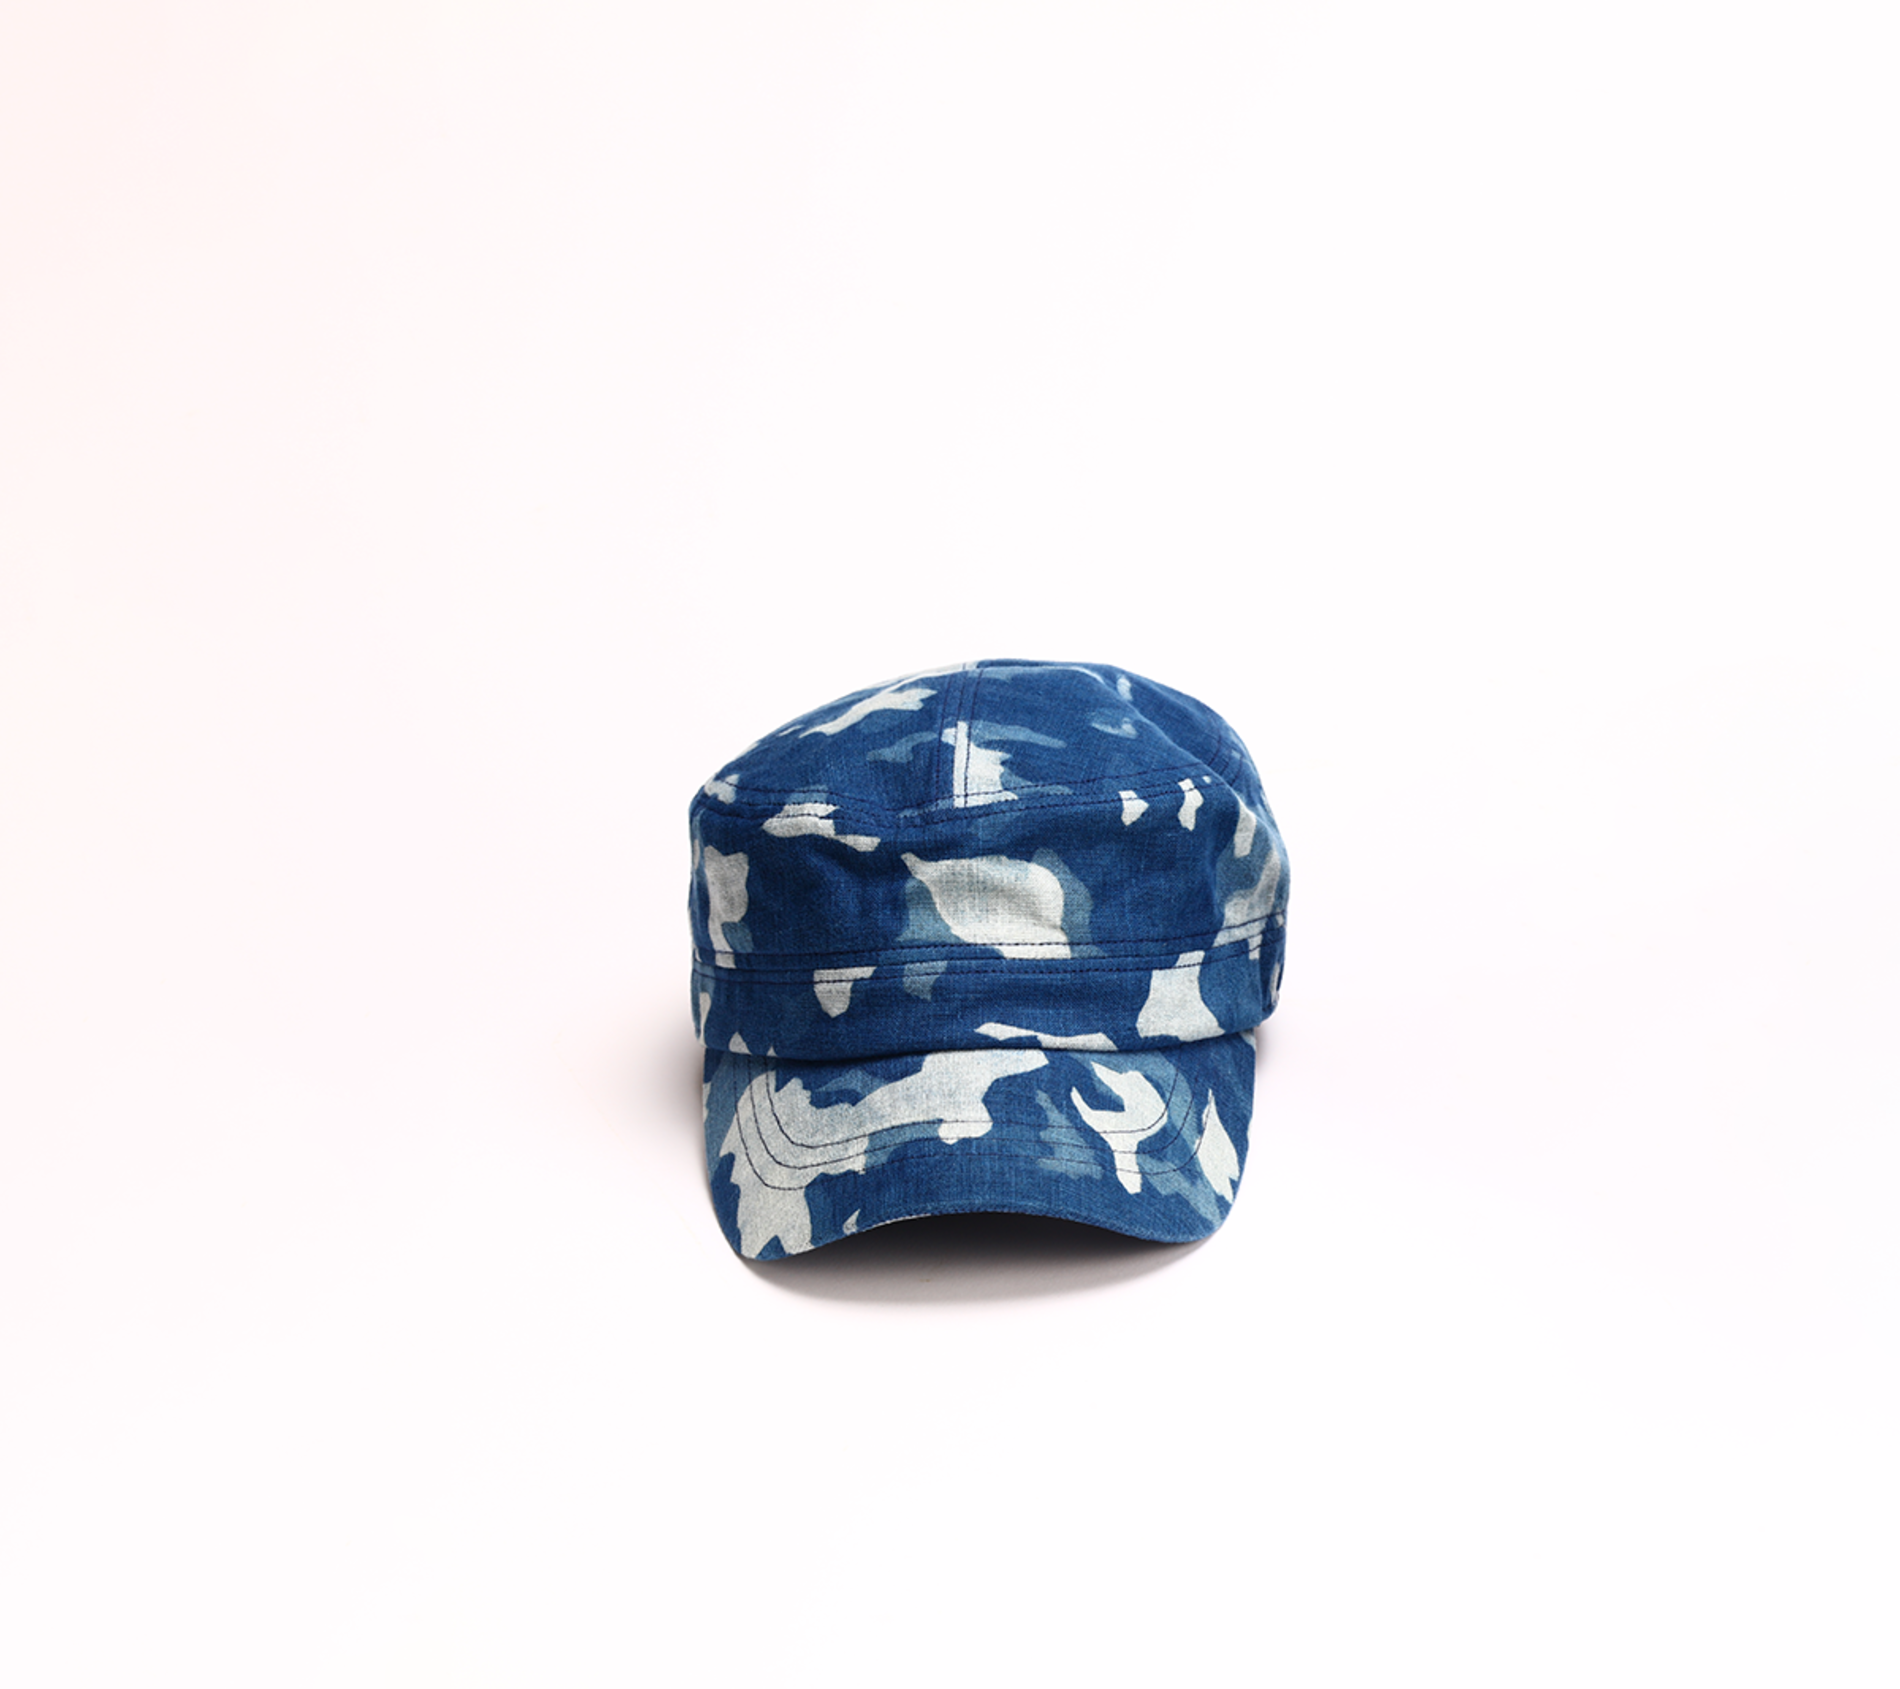 Camouflage military cap (1 left)